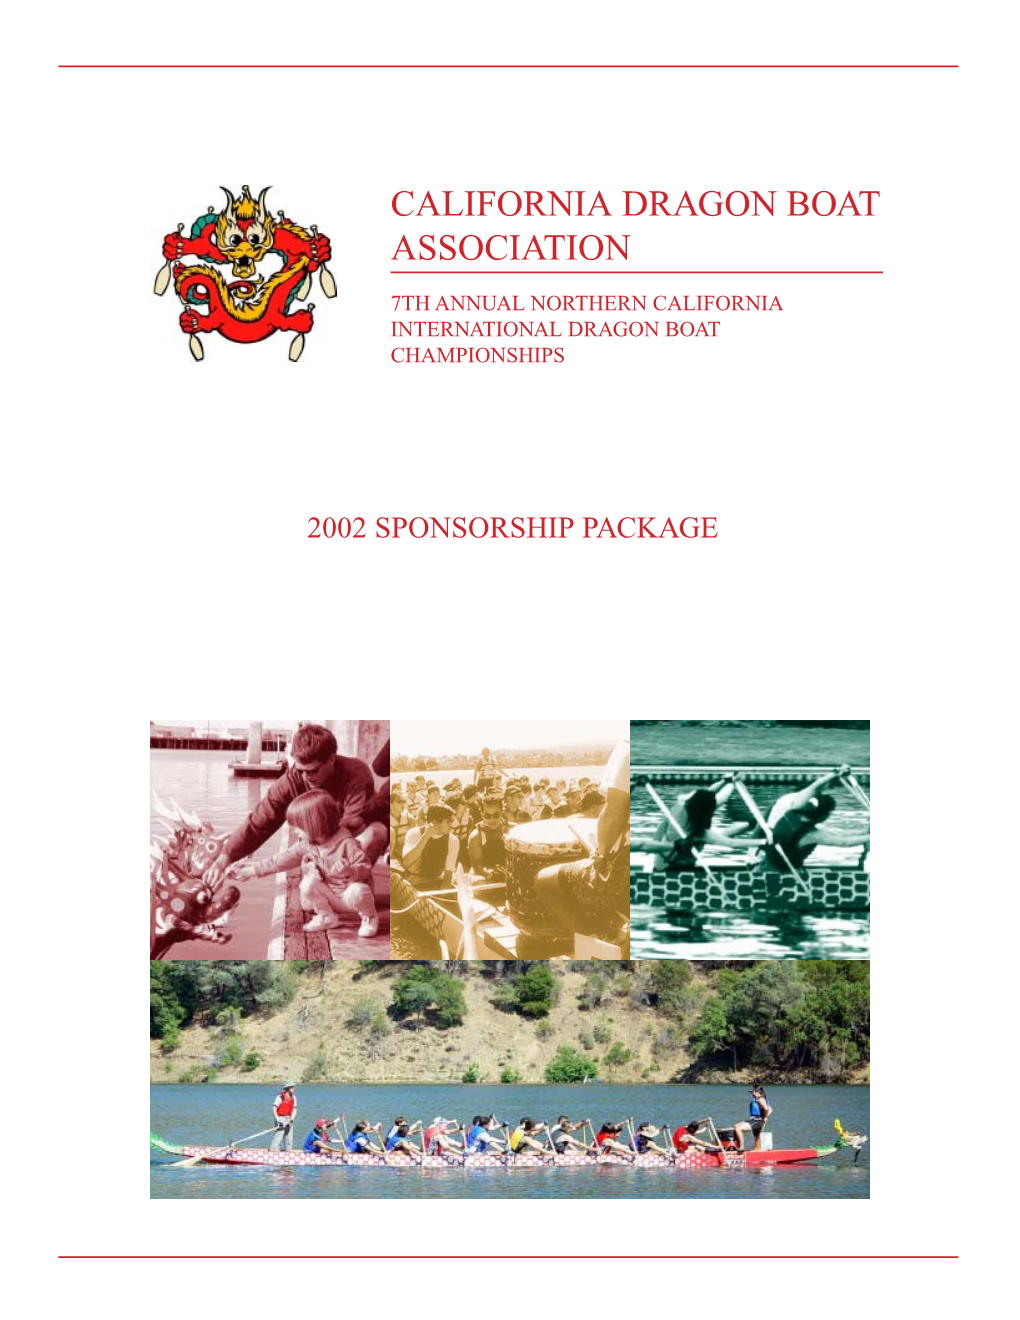 7Th Annual Northern California International Dragon Boat Championships